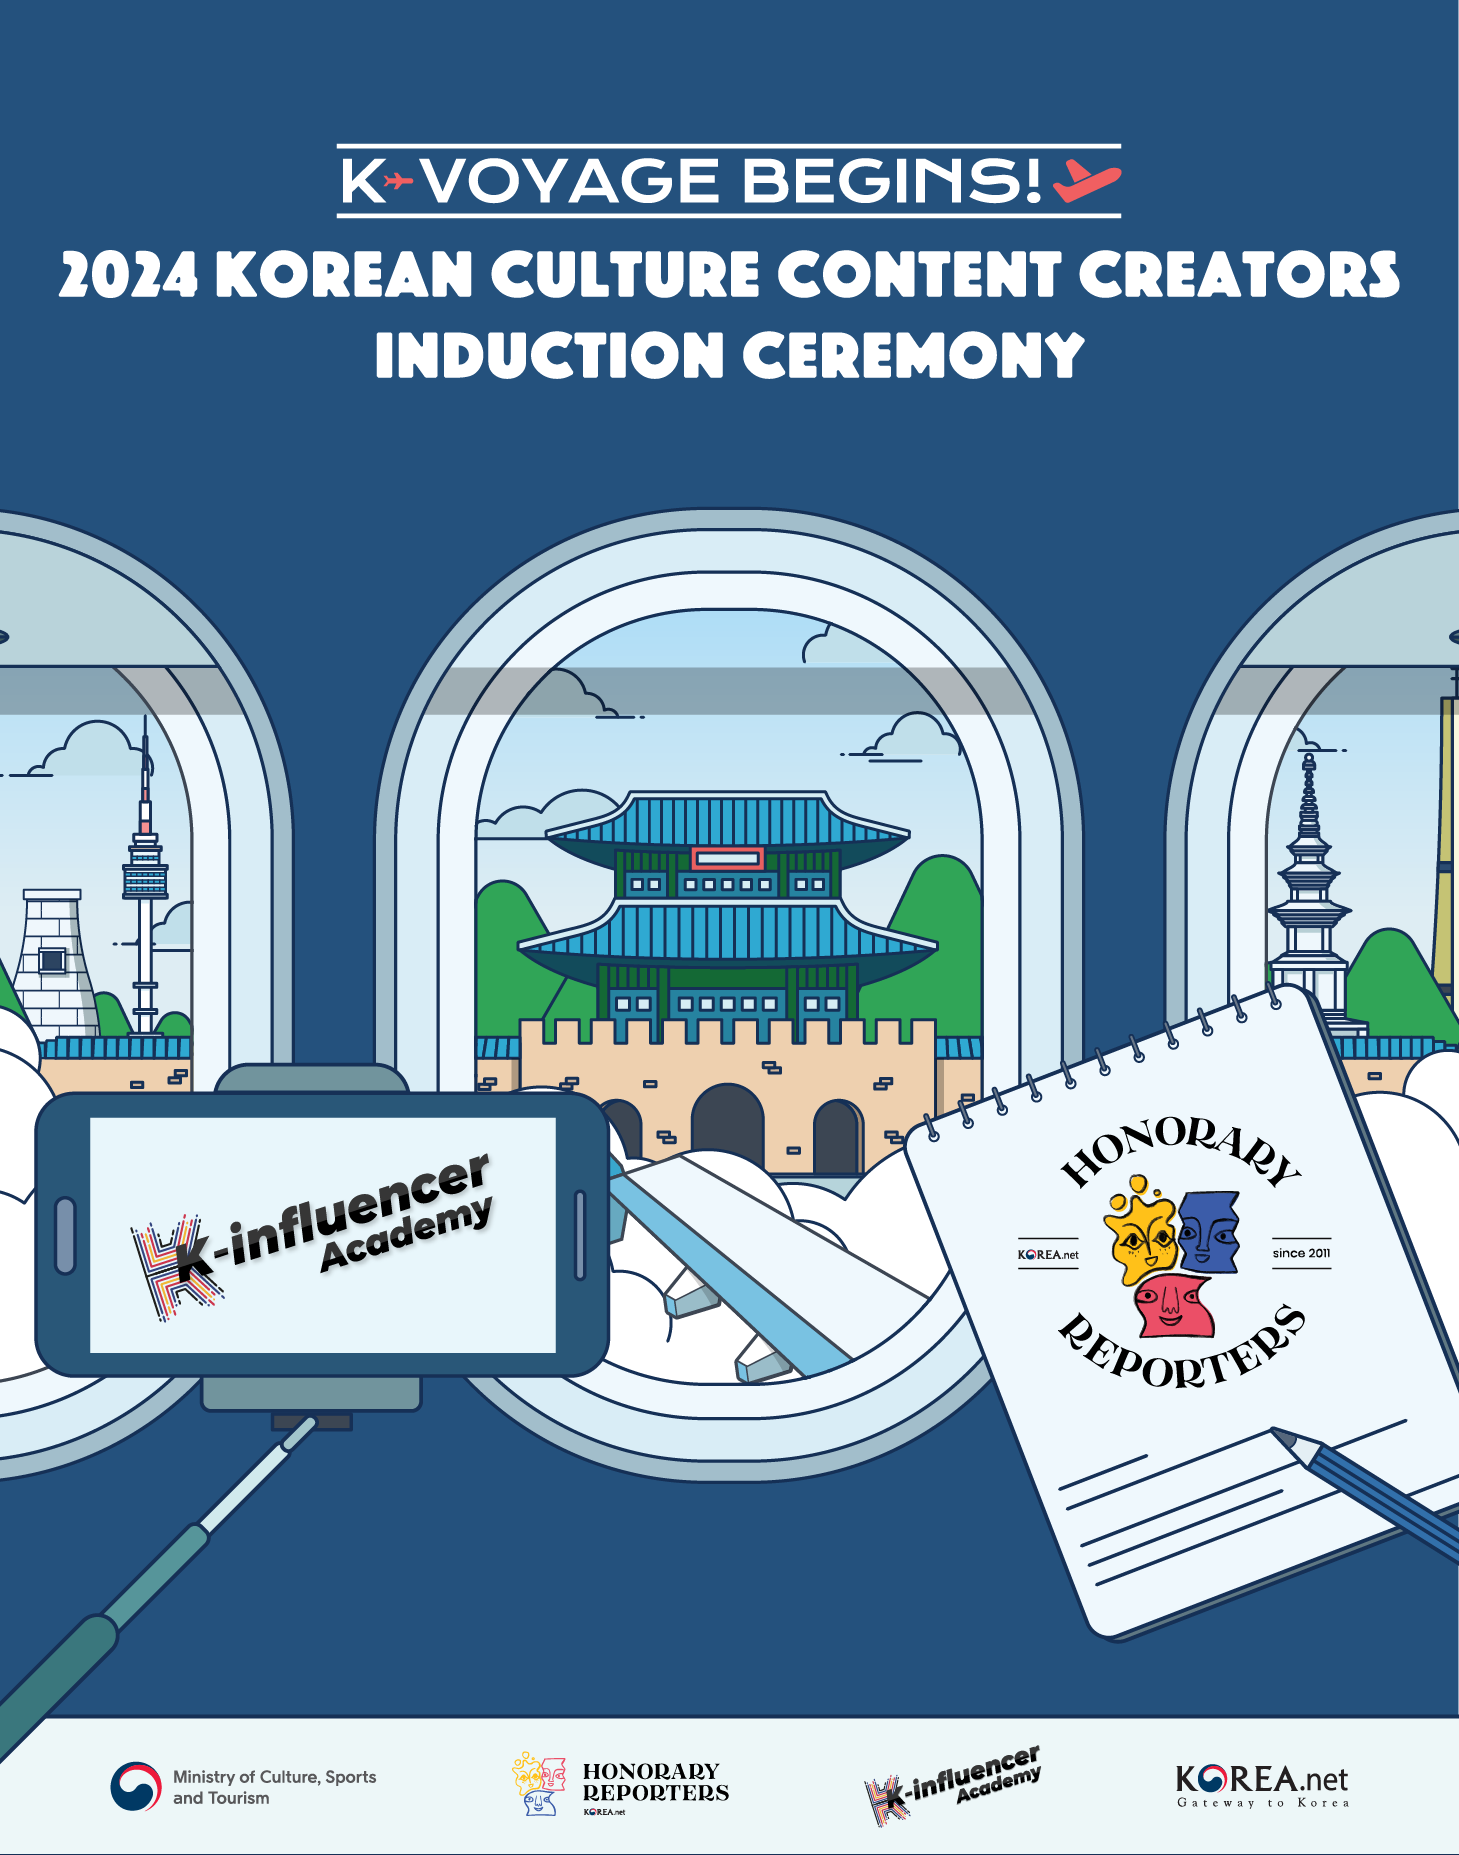 2024 Korean Culture Content Creators Induction Ceremony “K-Voyage Begins!”